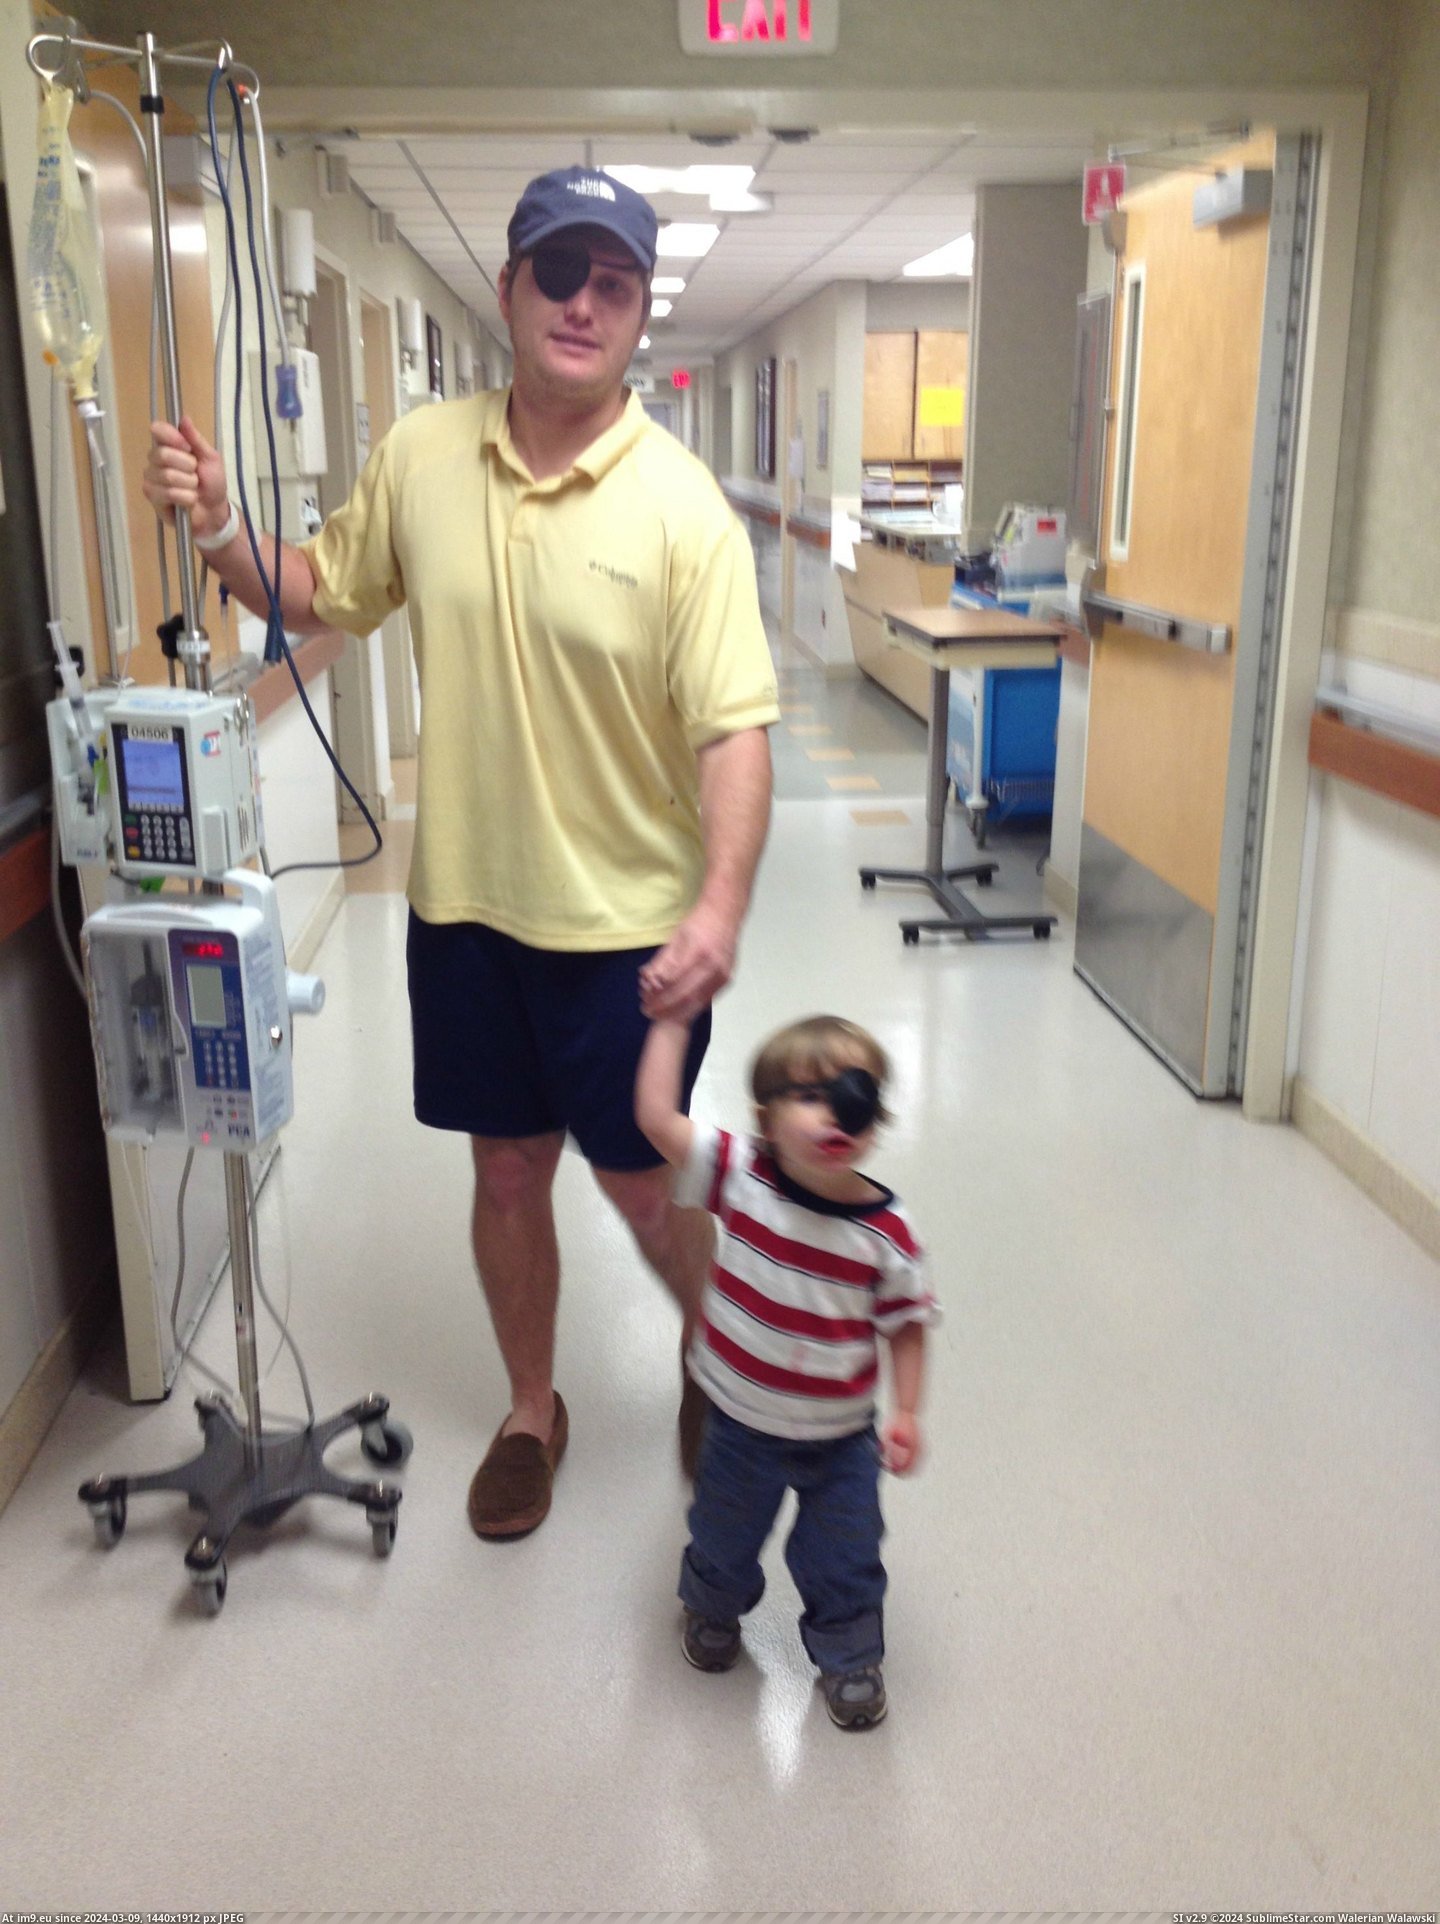 #Son #Walk #Bleed #Brainstem #Helping #Learn [Pics] After a bleed in my brainstem, this is my son, helping me learn to walk again. Pic. (Obraz z album My r/PICS favs))